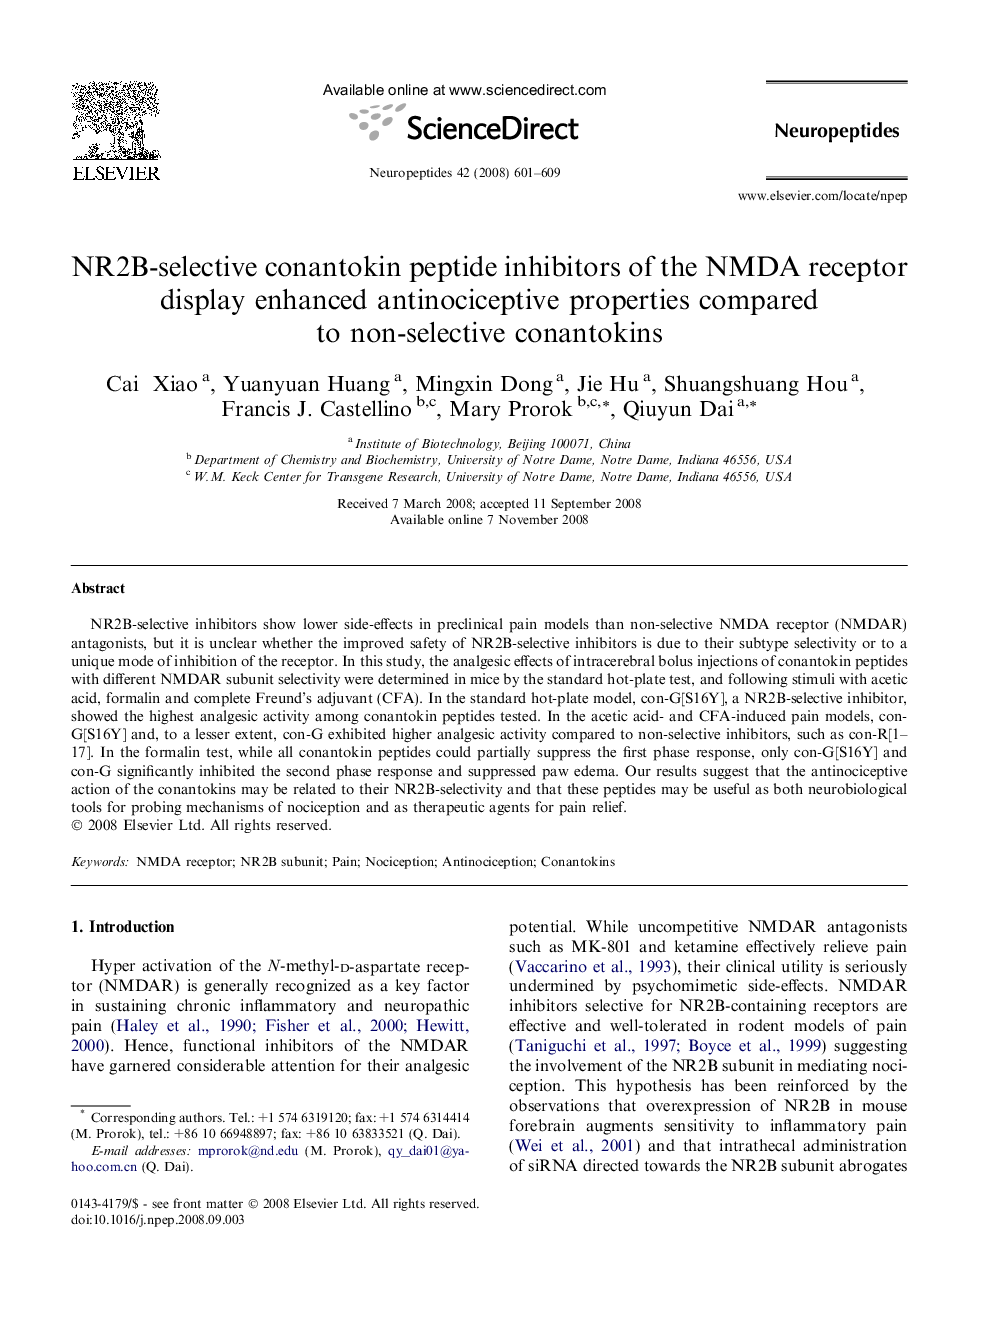 NR2B-selective conantokin peptide inhibitors of the NMDA receptor display enhanced antinociceptive properties compared to non-selective conantokins